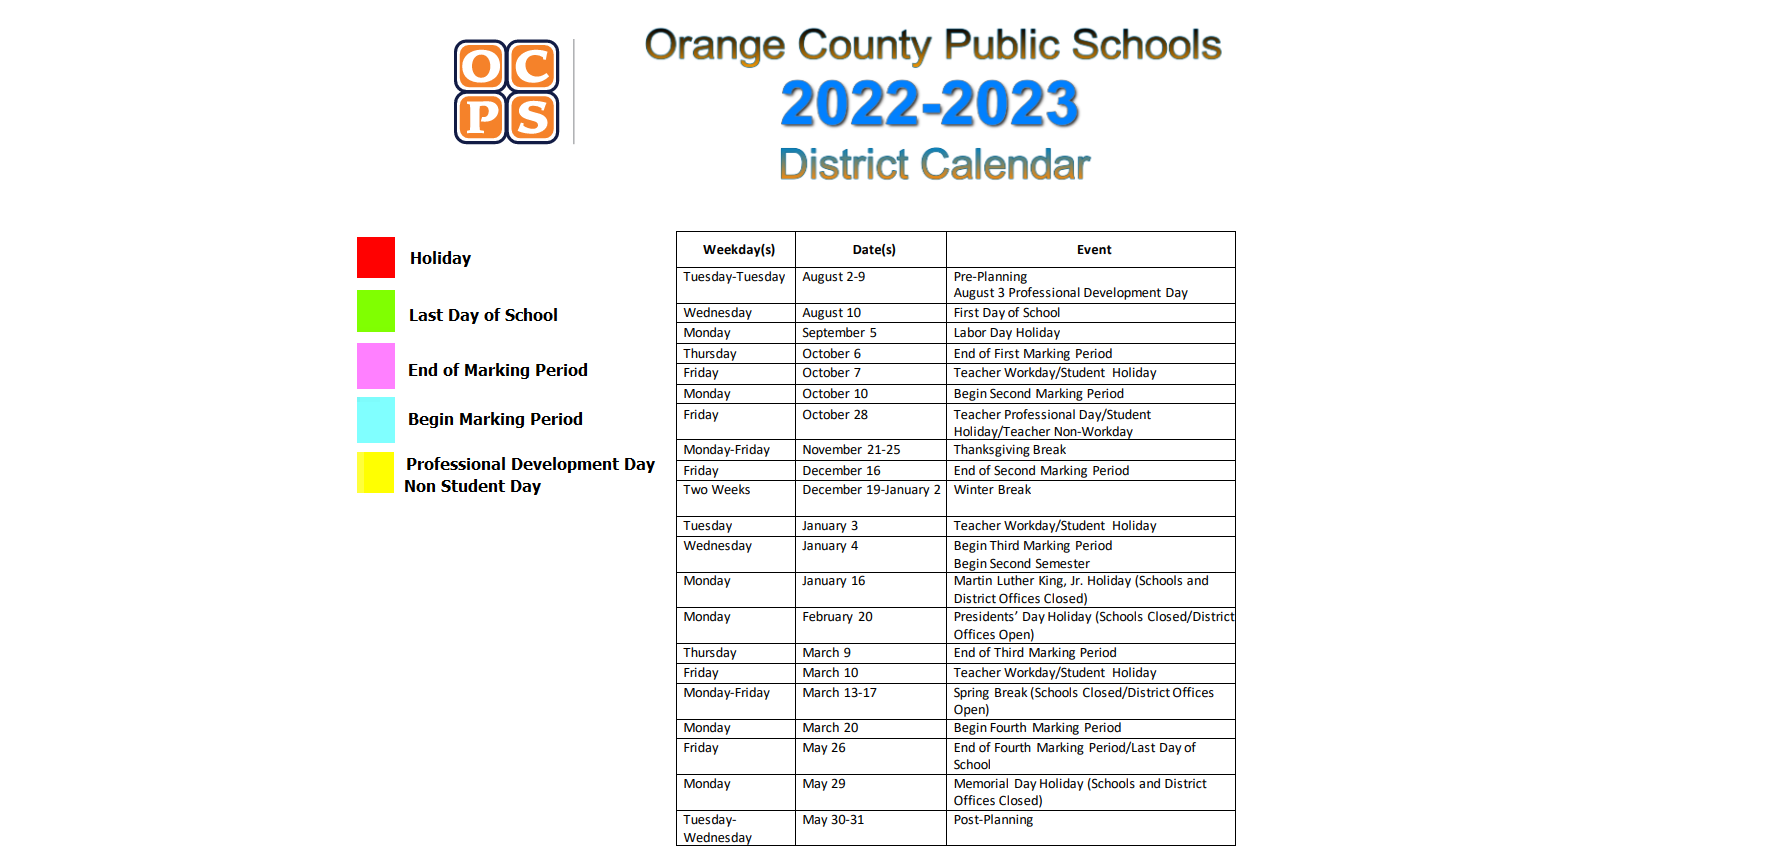 District School Academic Calendar Key for Union Park Elementary School